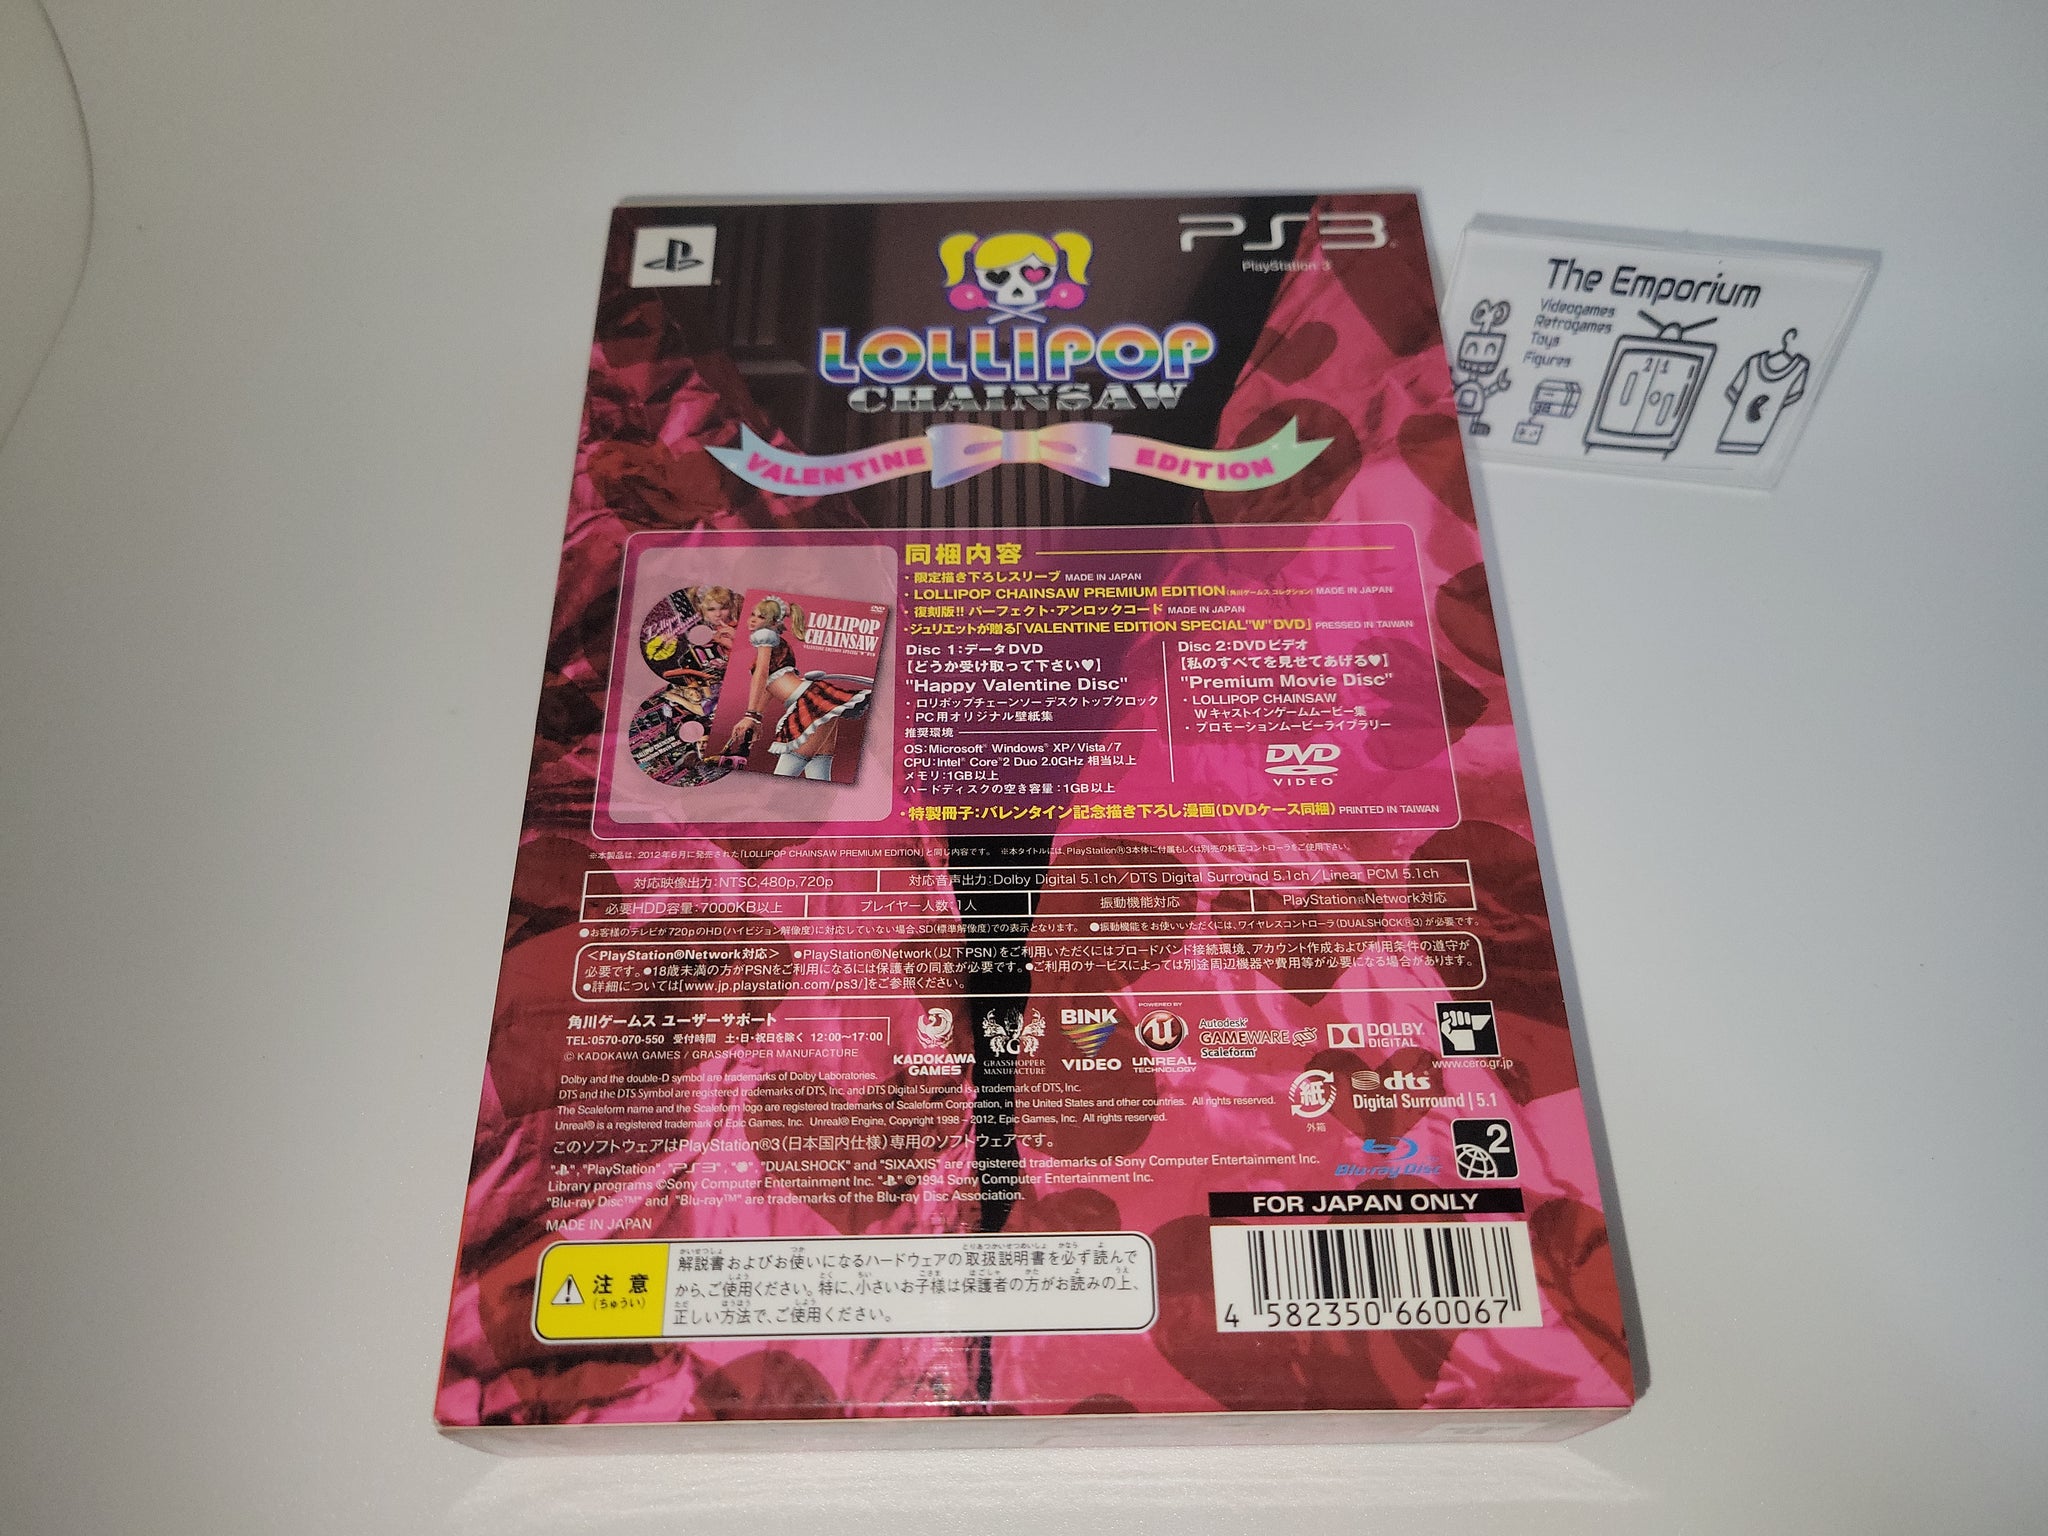  LOLLIPOP CHAINSAW VALENTINE EDITION [Japan Import] : Video Games